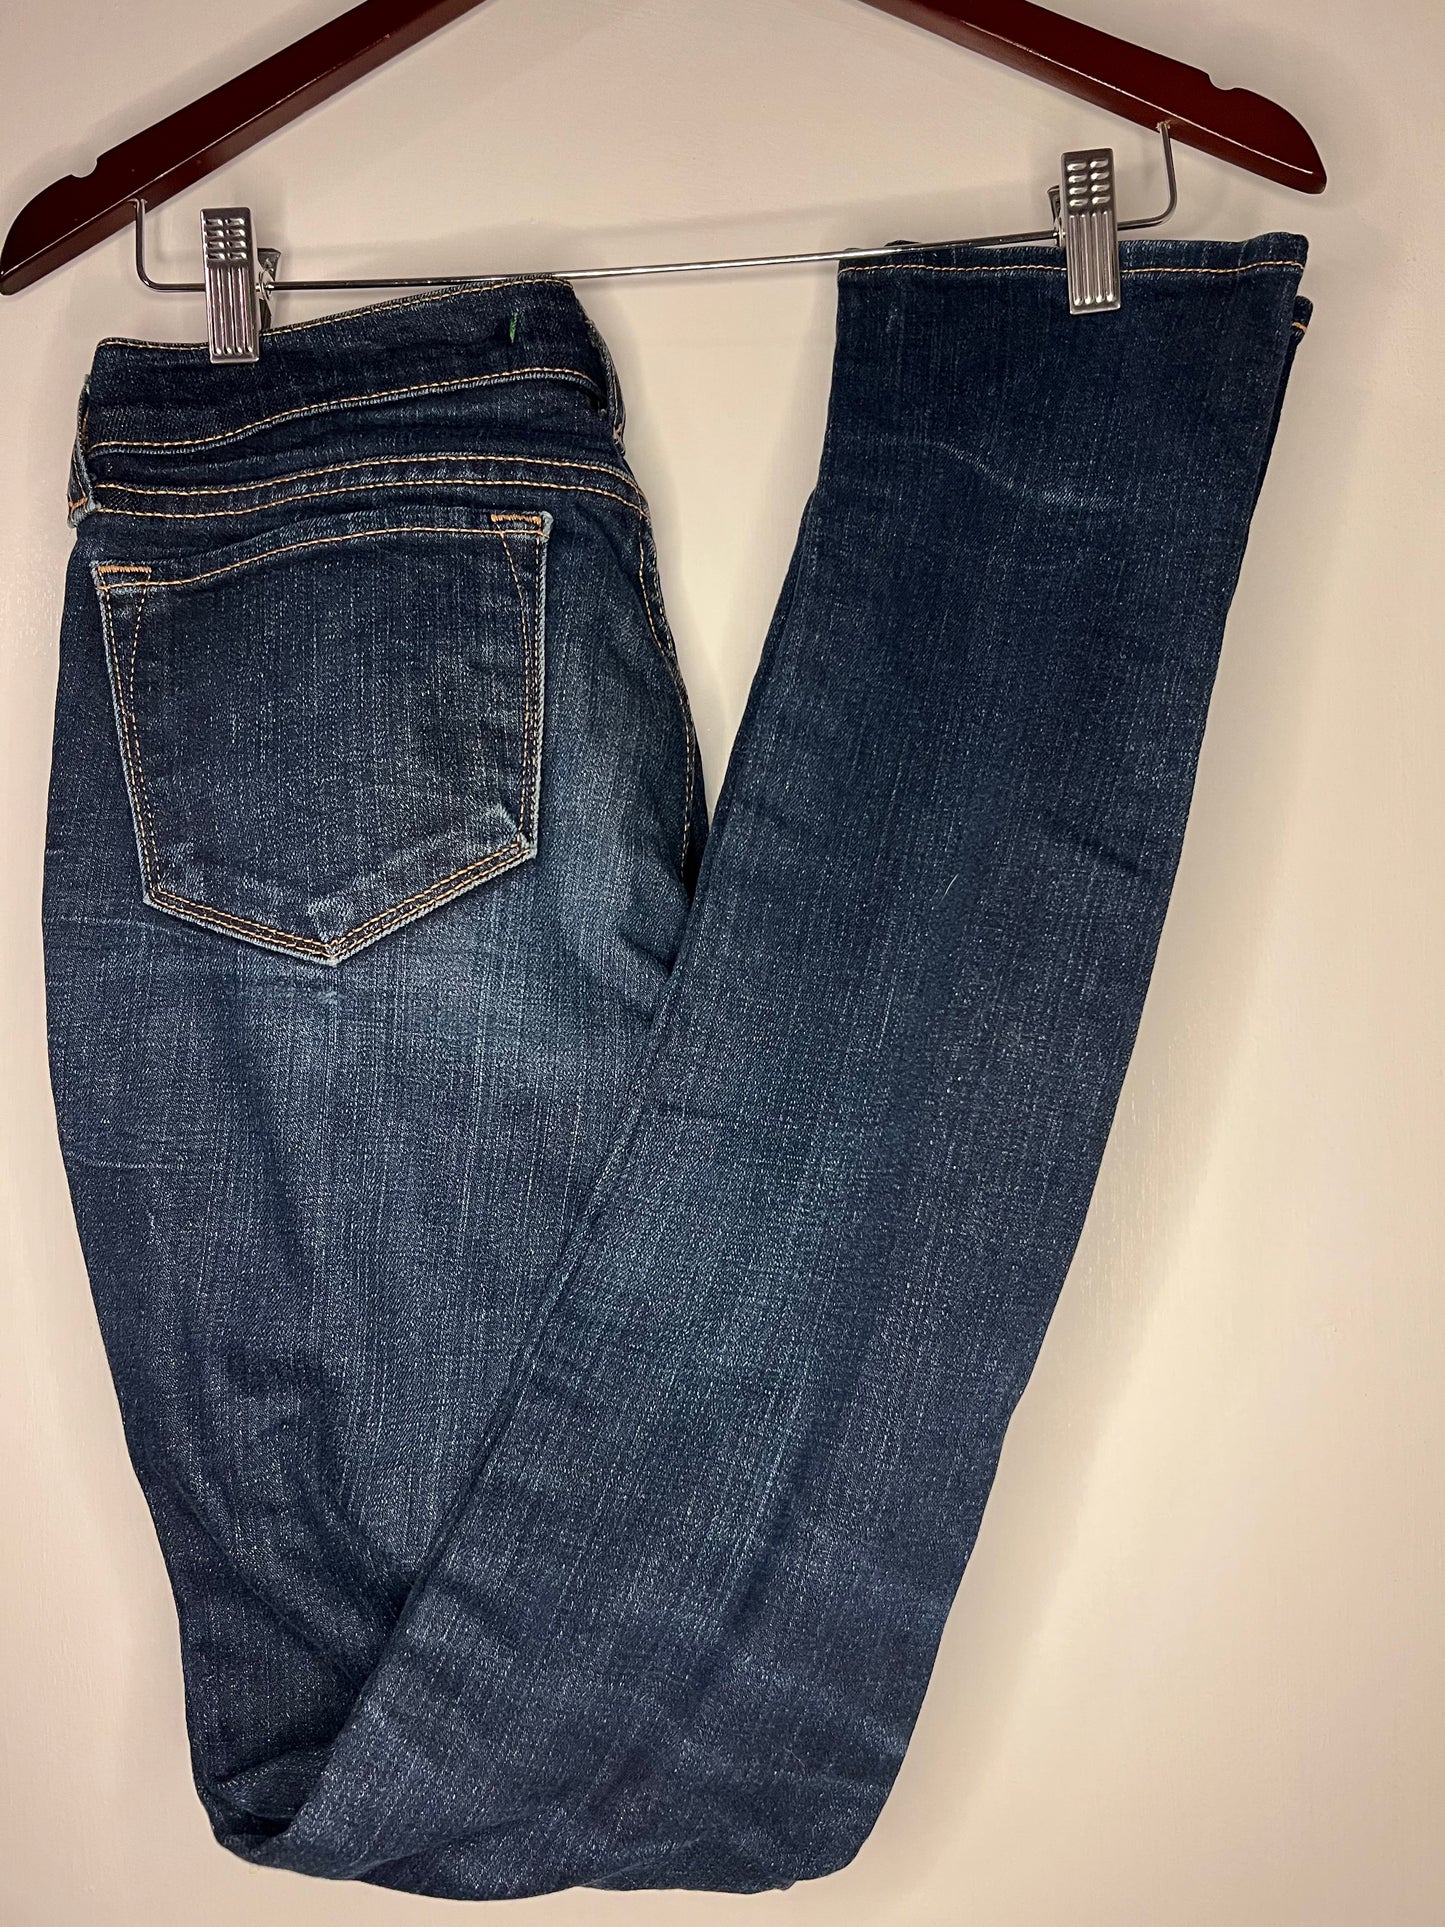 J Brand Blue Dark Wash Denim Jeans Size 26 EUC PPU 45208 or SCO Spring Sale